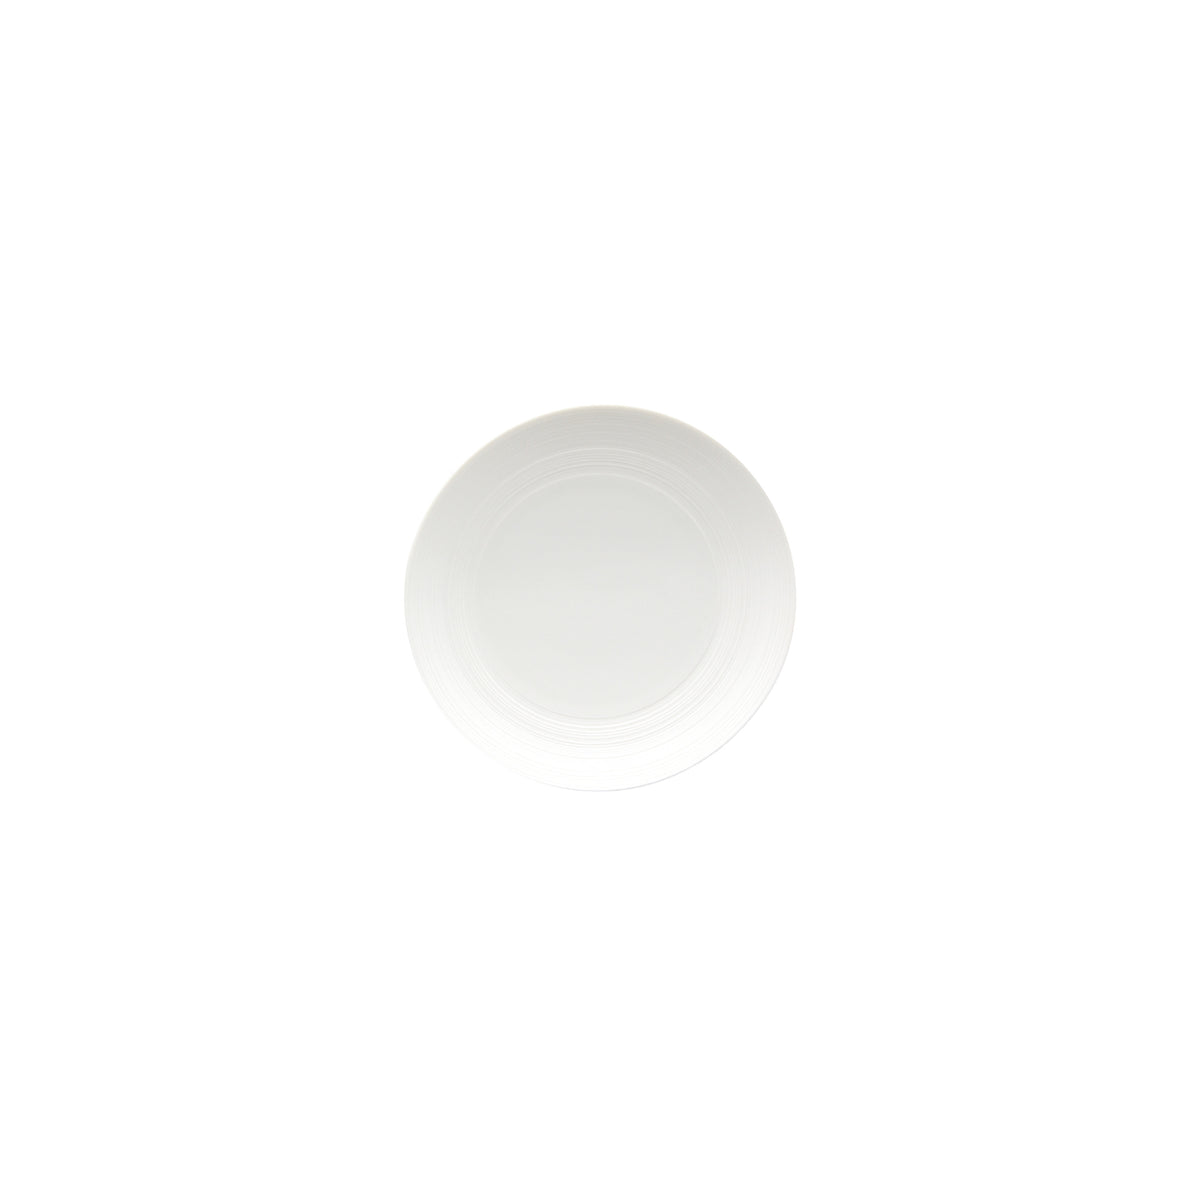 HEMISPHERE White Satin - 10 Asian plate